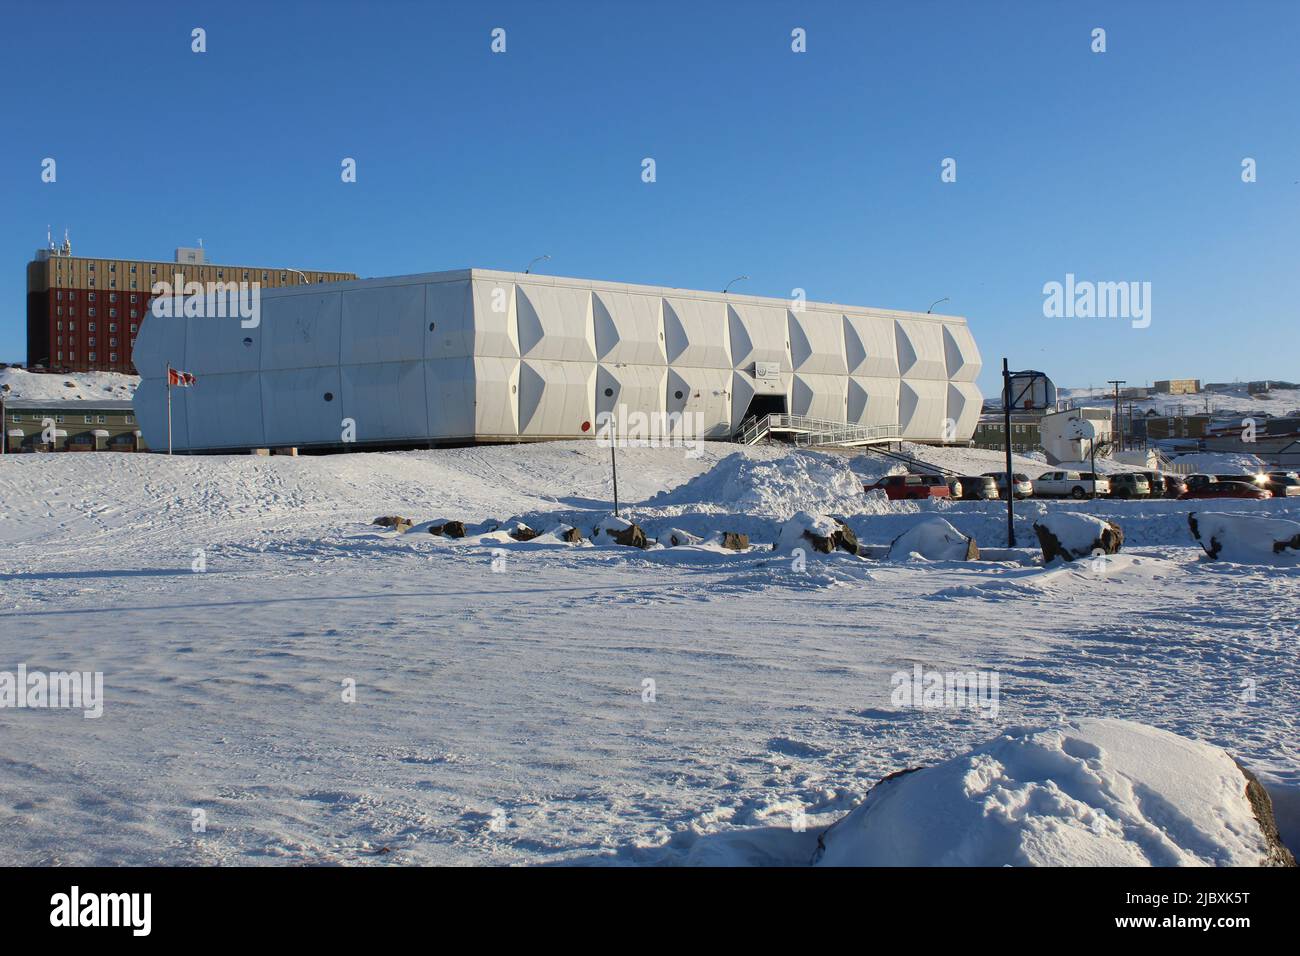 Elementary school in Iqaluit, Nunavut, Canada Stock Photo